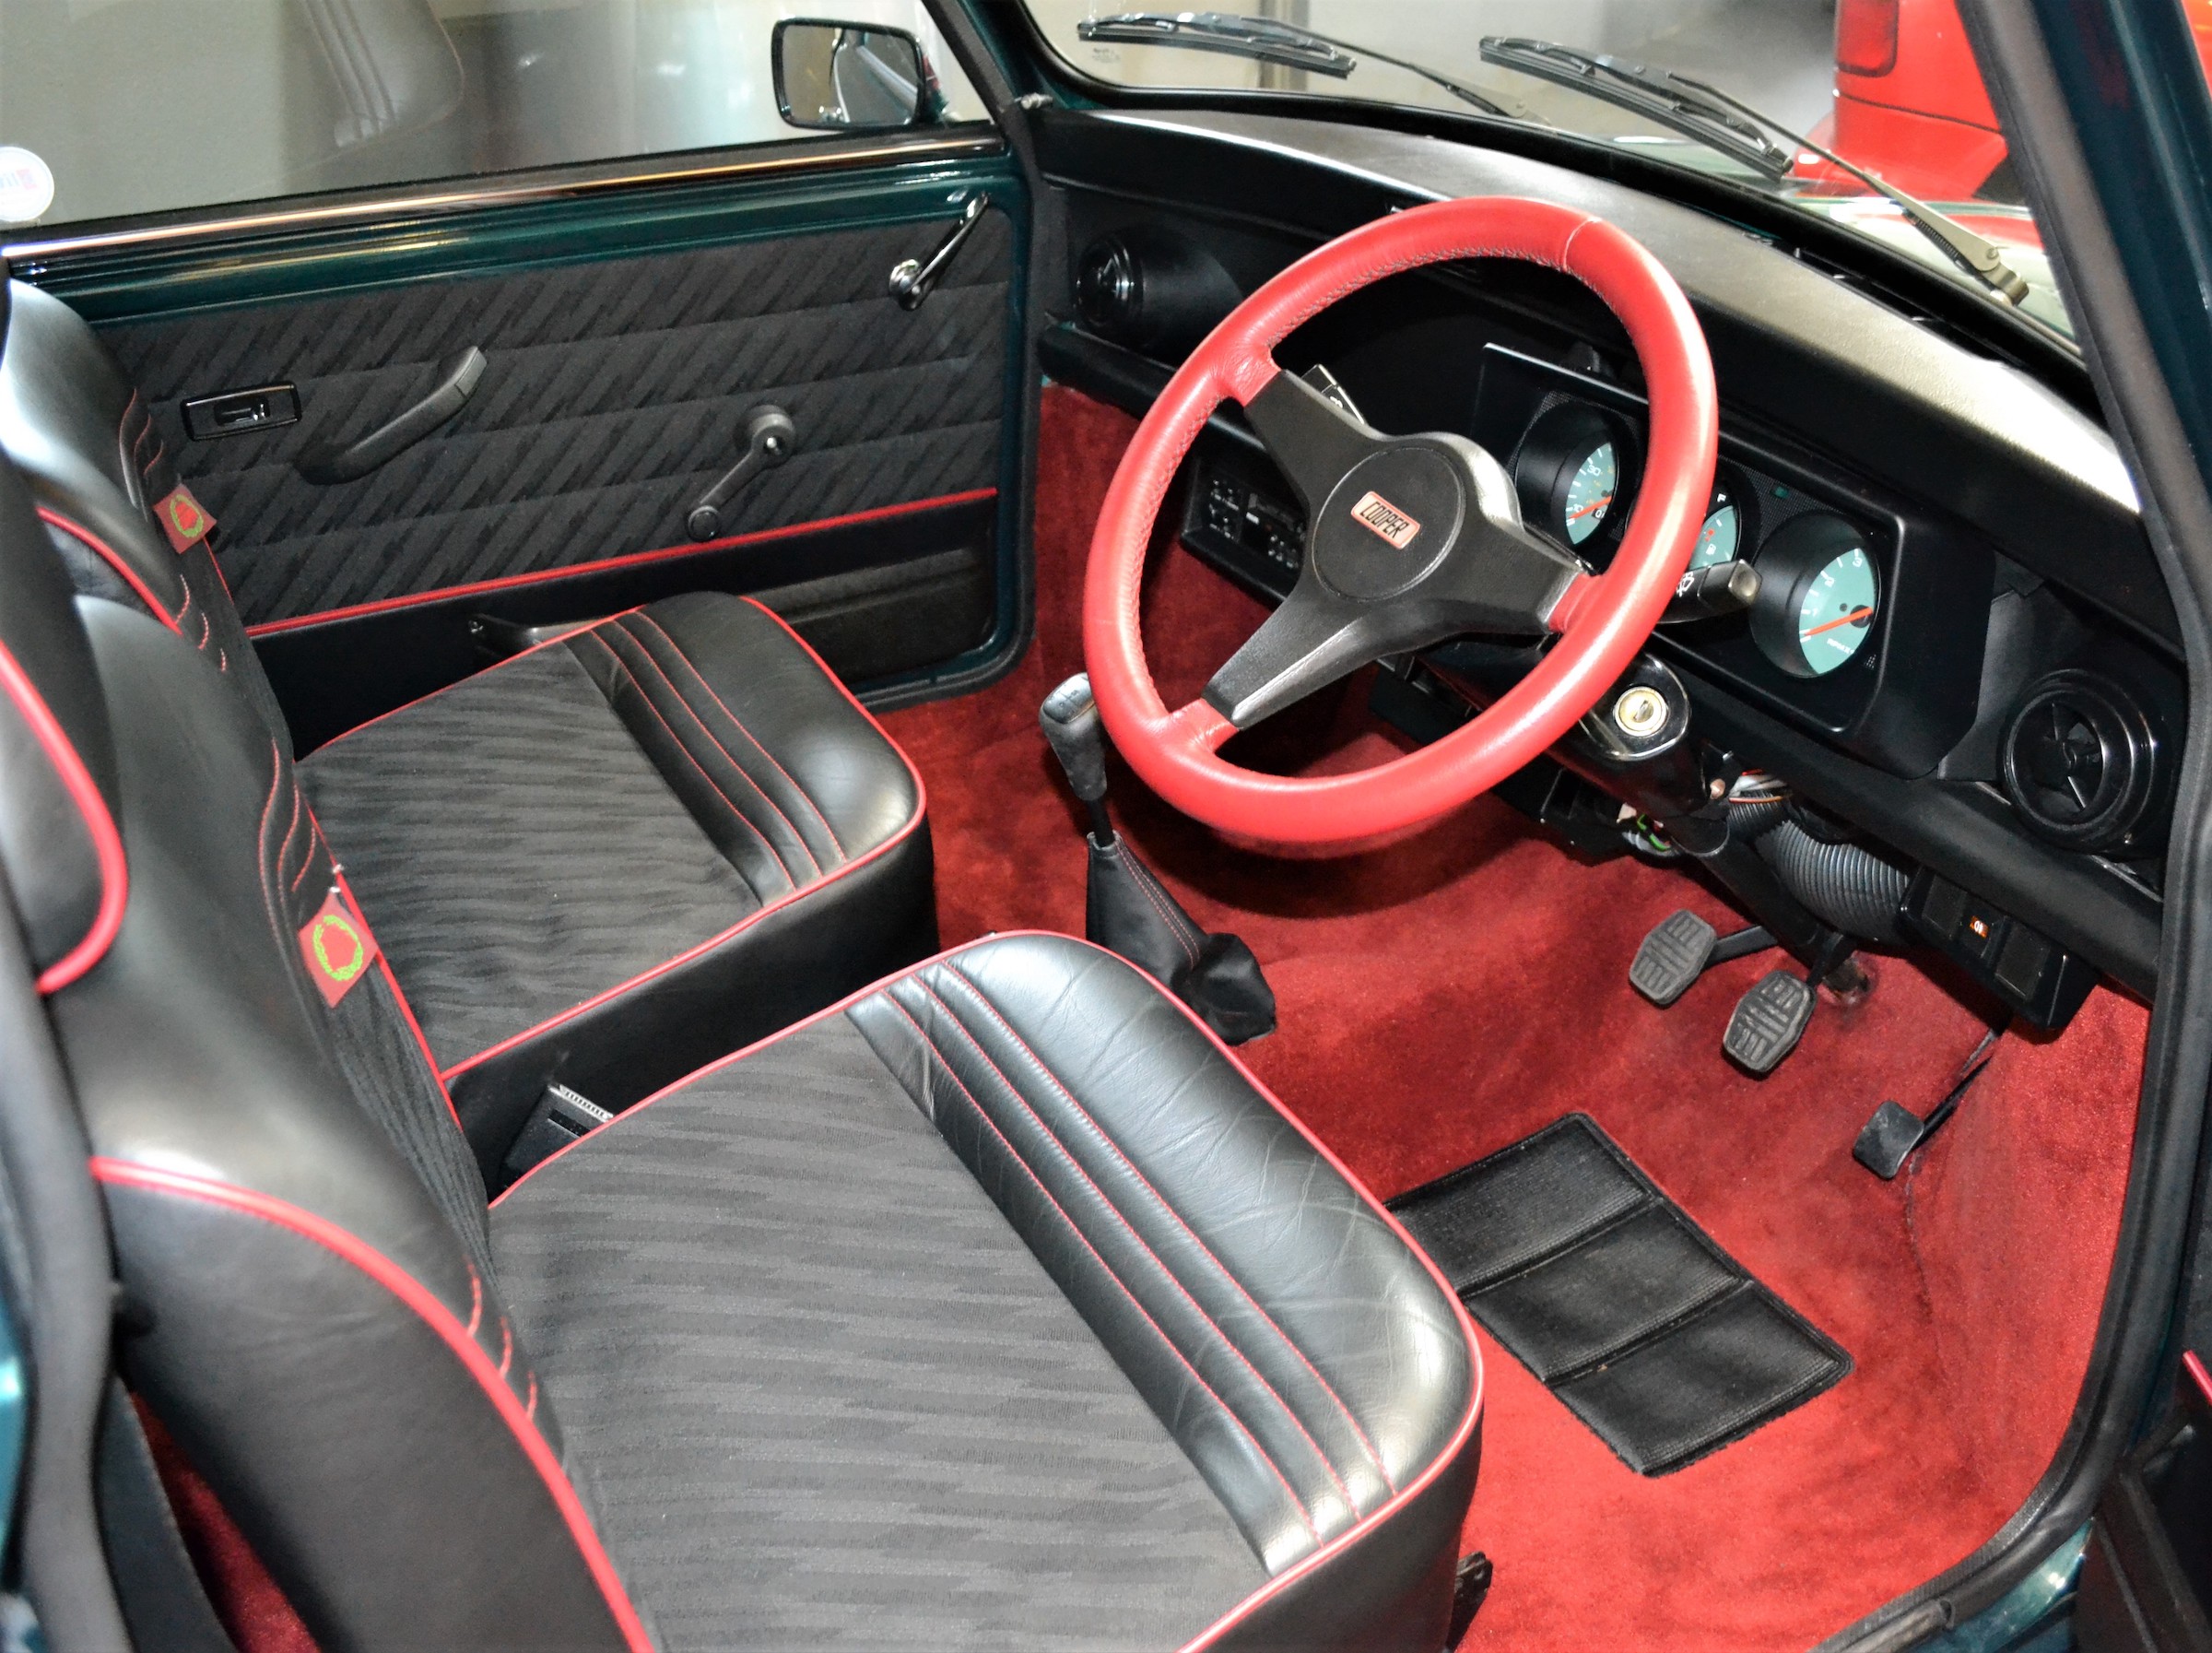 1990 Rover Mini Cooper RSP interior